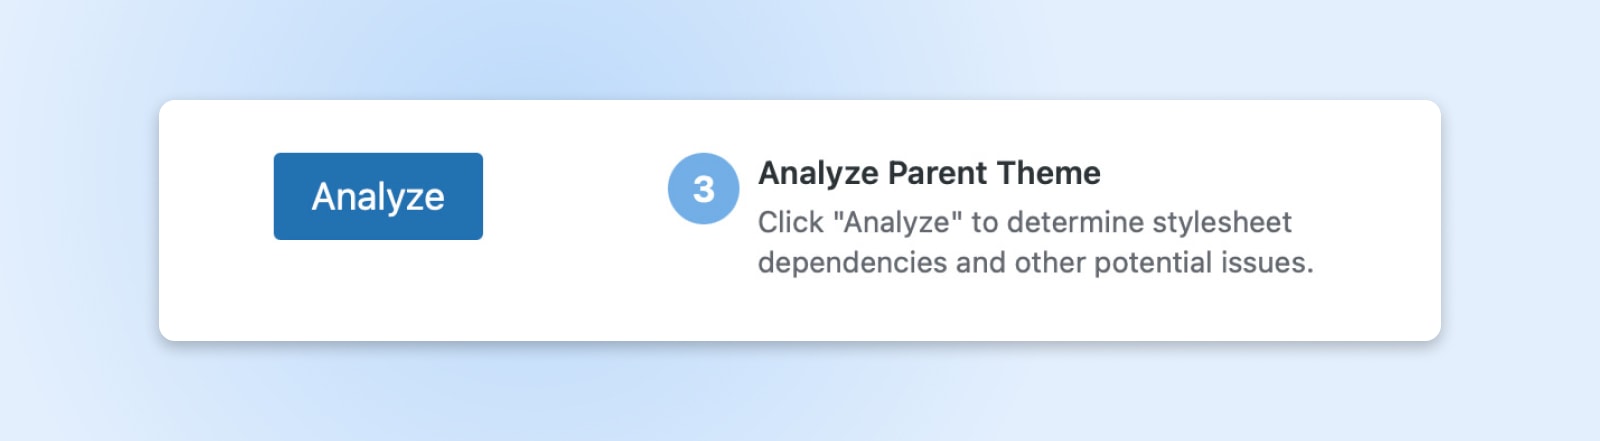 step 2: analyze parent theme